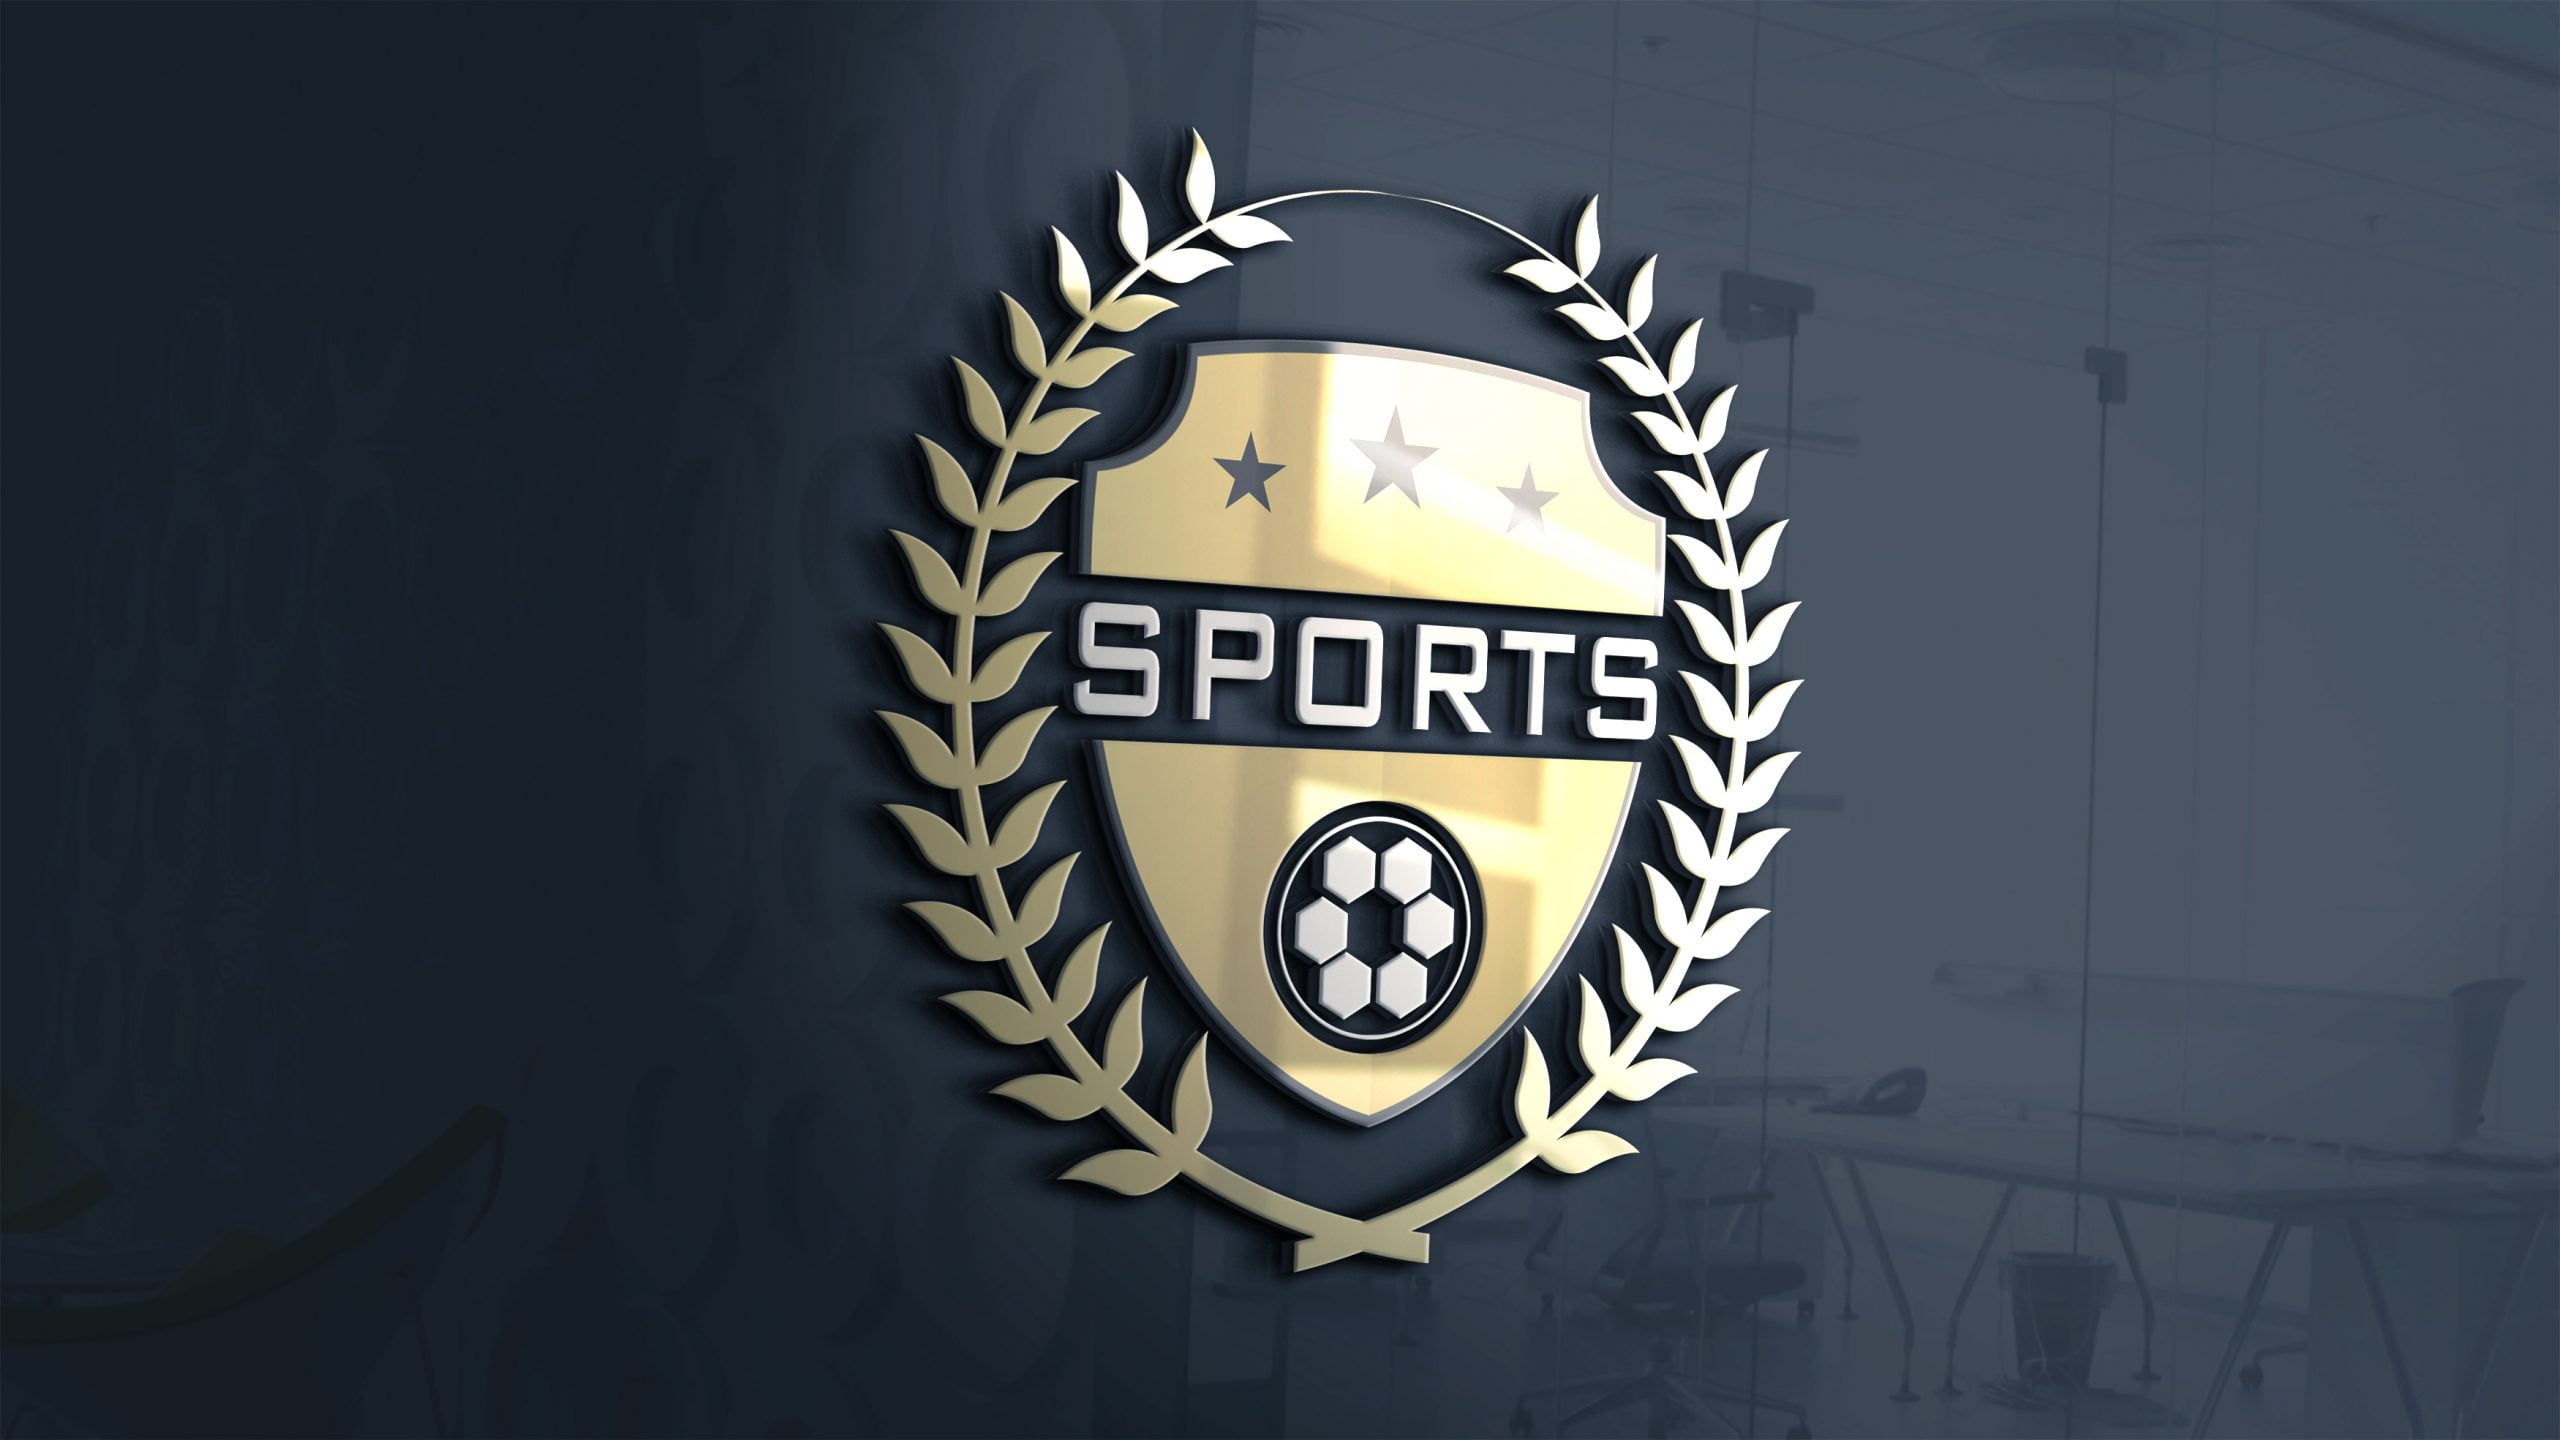 Football Club Emblem Logo Template Photoshop Source